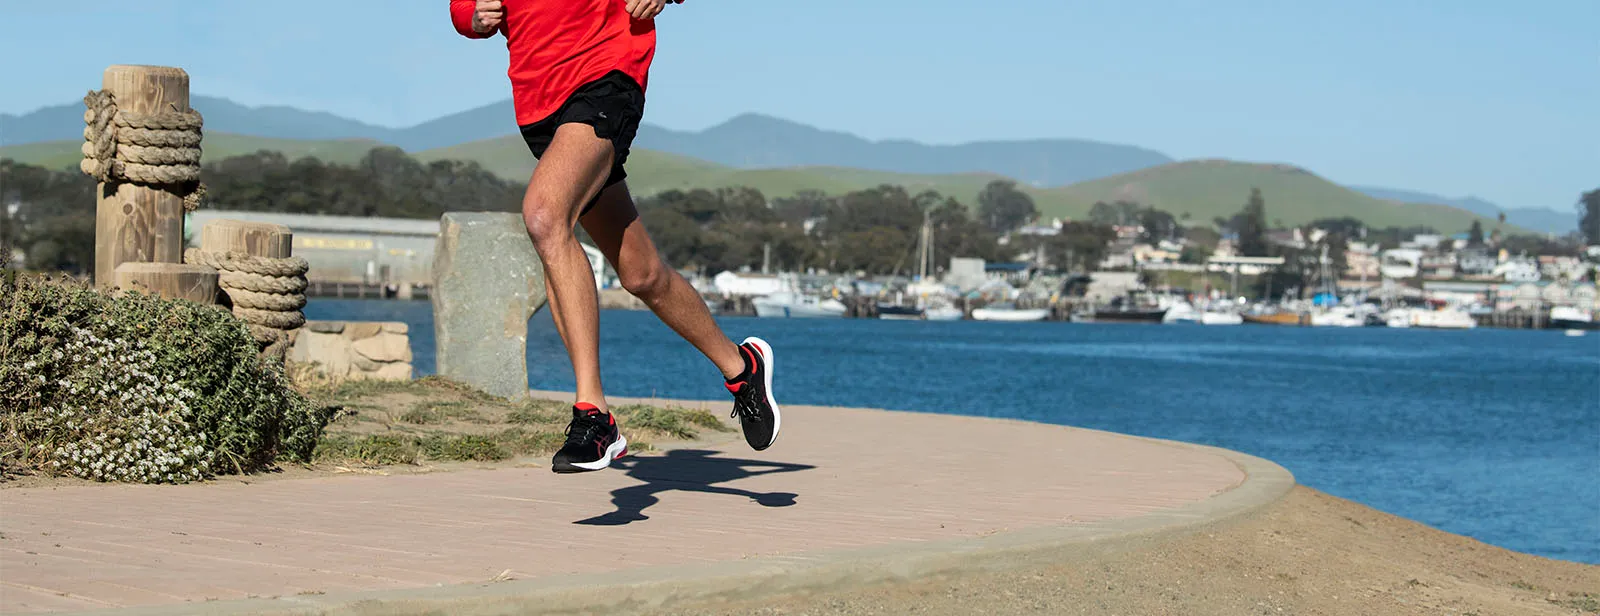 5 Ways to Vary Your Running Training Plan